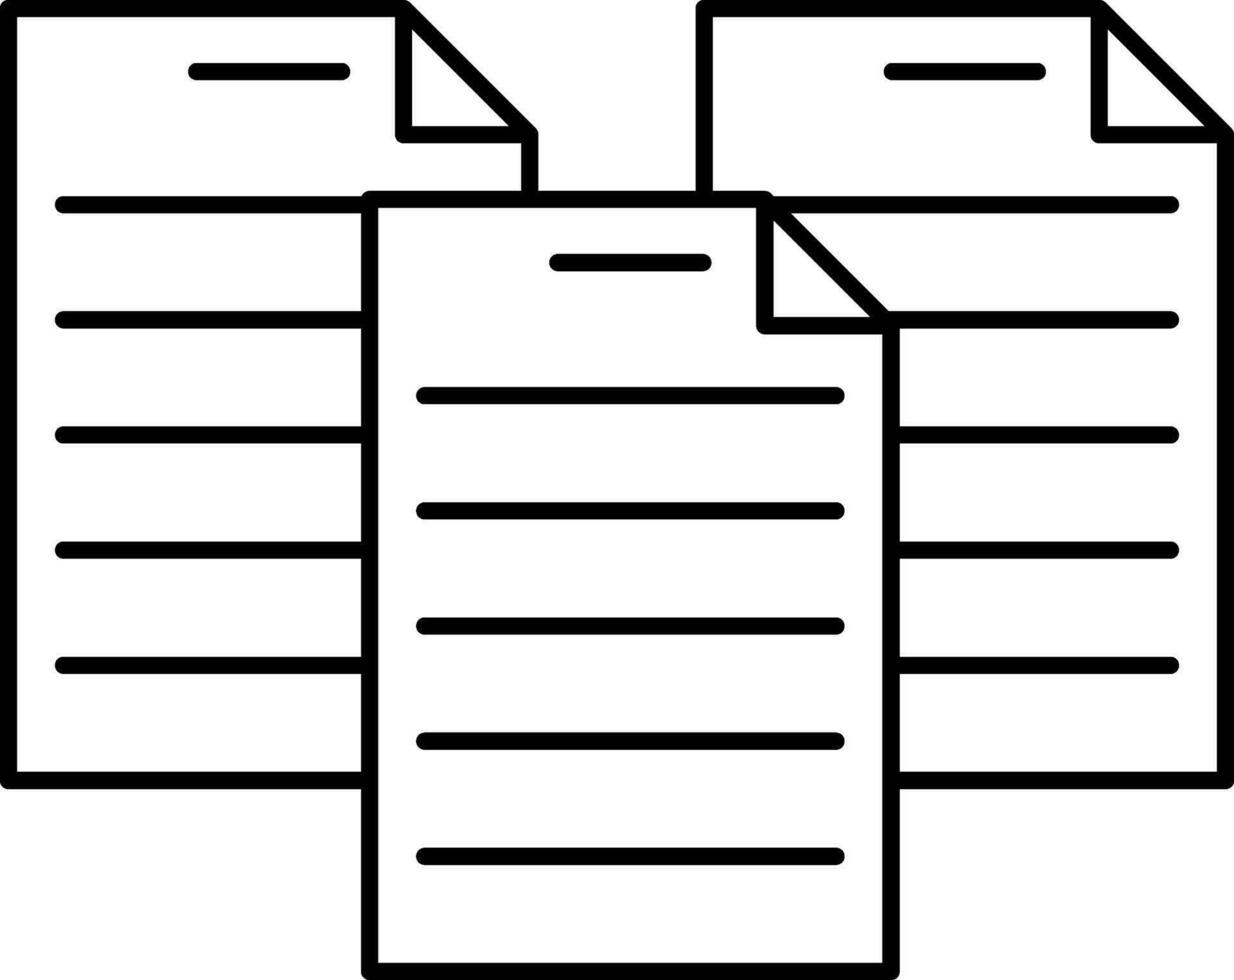 papper eller filer ikon i tunn linje konst. vektor